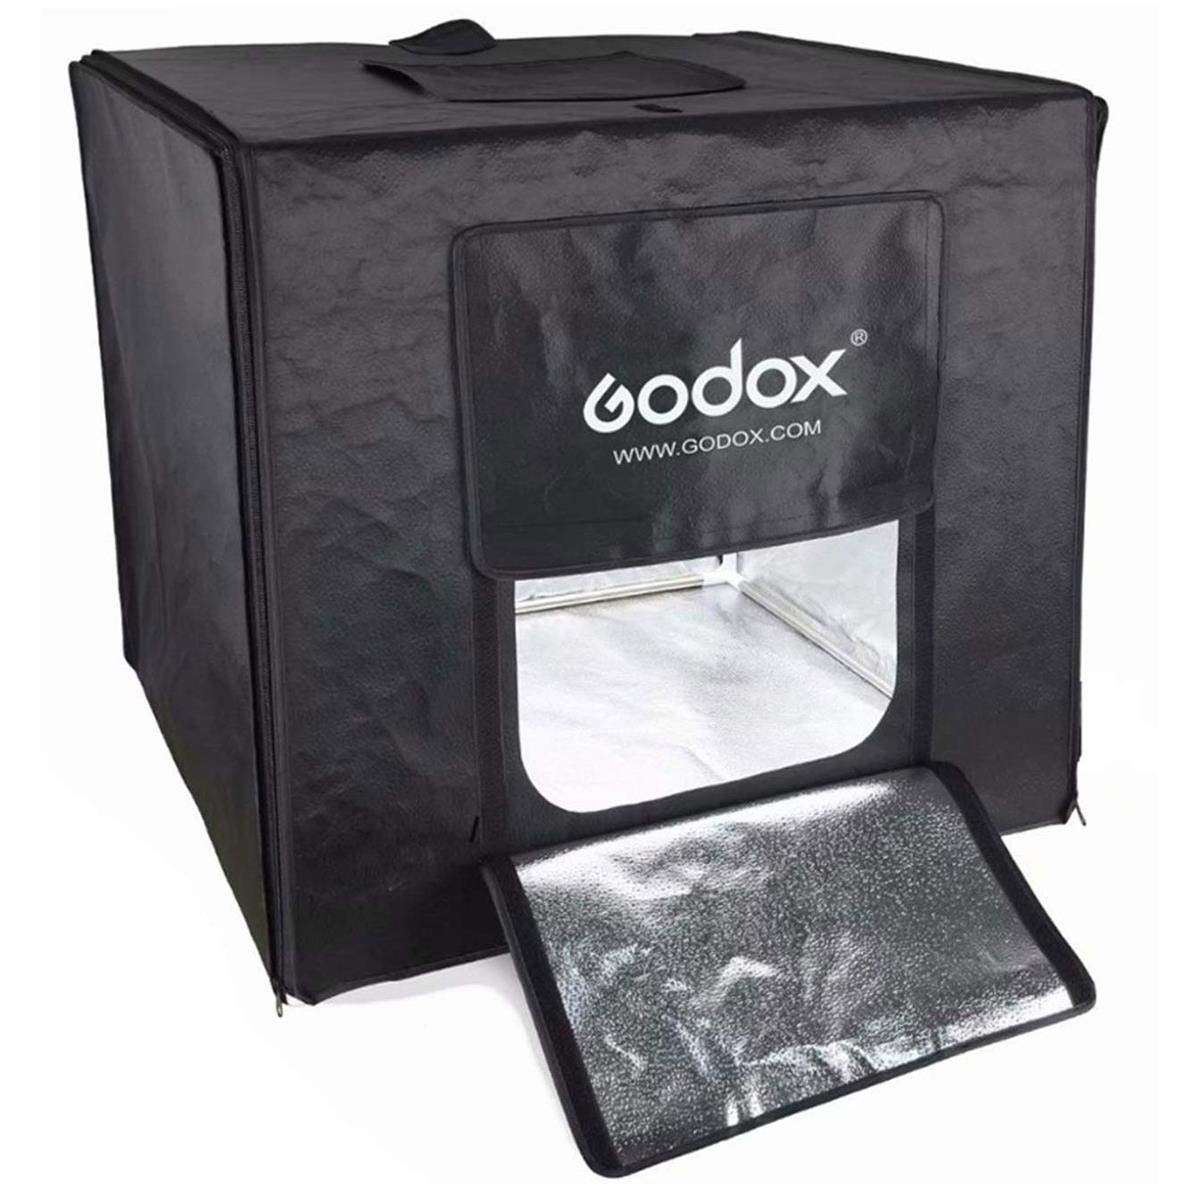 Godox Portable Triple Light LED Ministudio - 80x80x80cm - Professionelle Fotostudiobeleuchtung, Produktfotobox, Mini-Fotostudio für Produktfotos